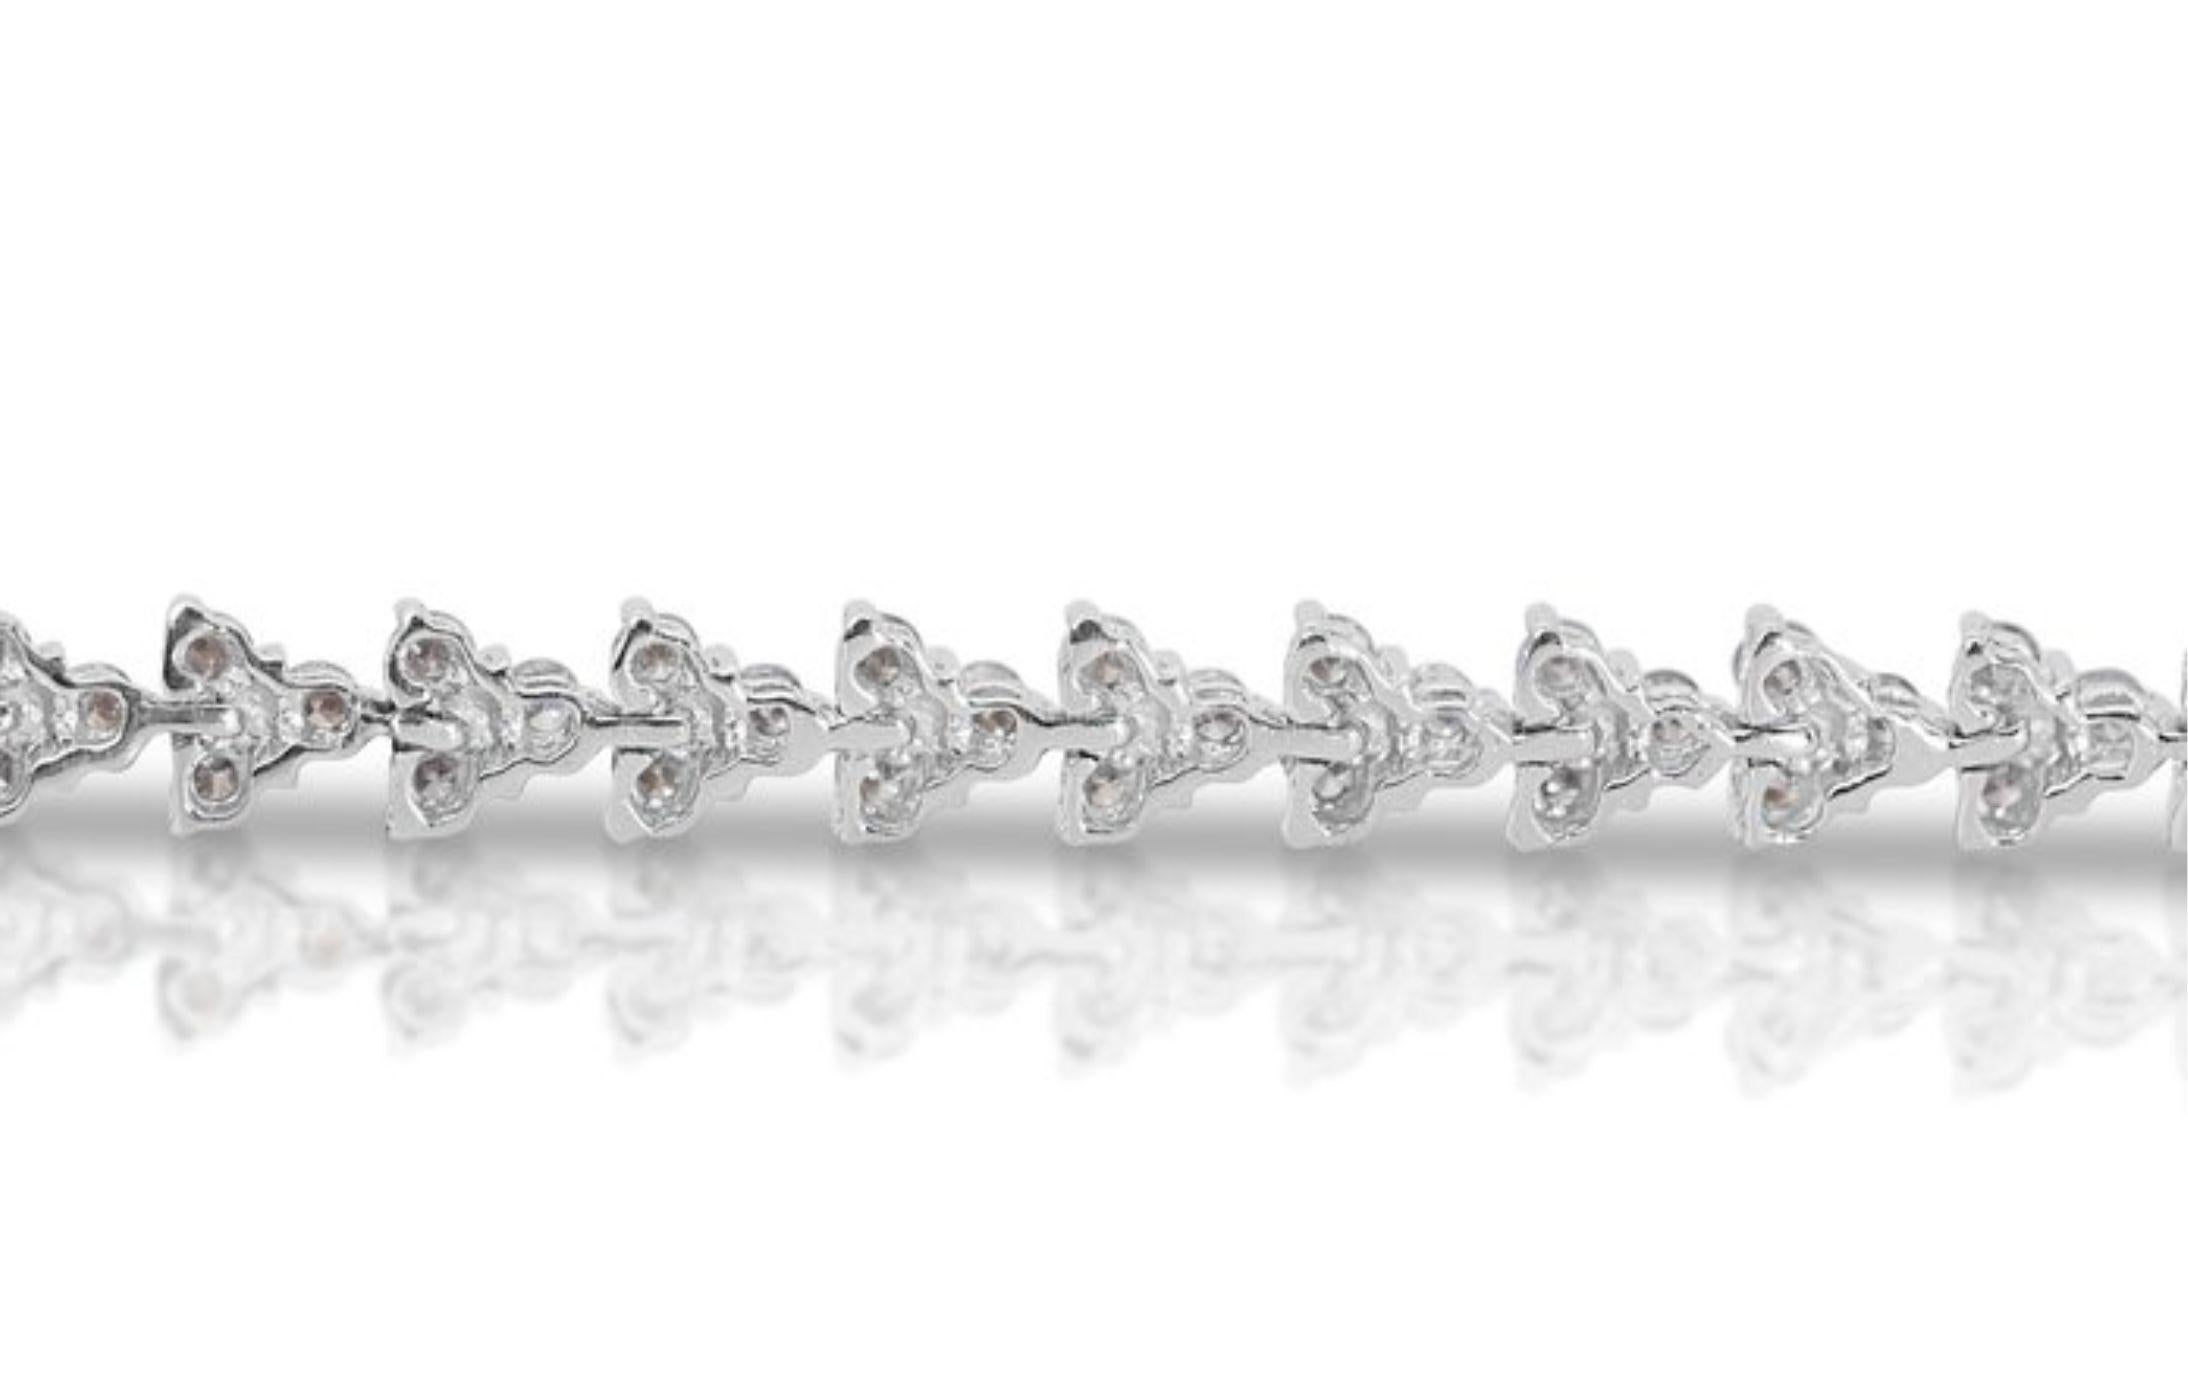 Exquisite 3.75ct Round Diamond Bracelet set in 14K White Gold For Sale 3